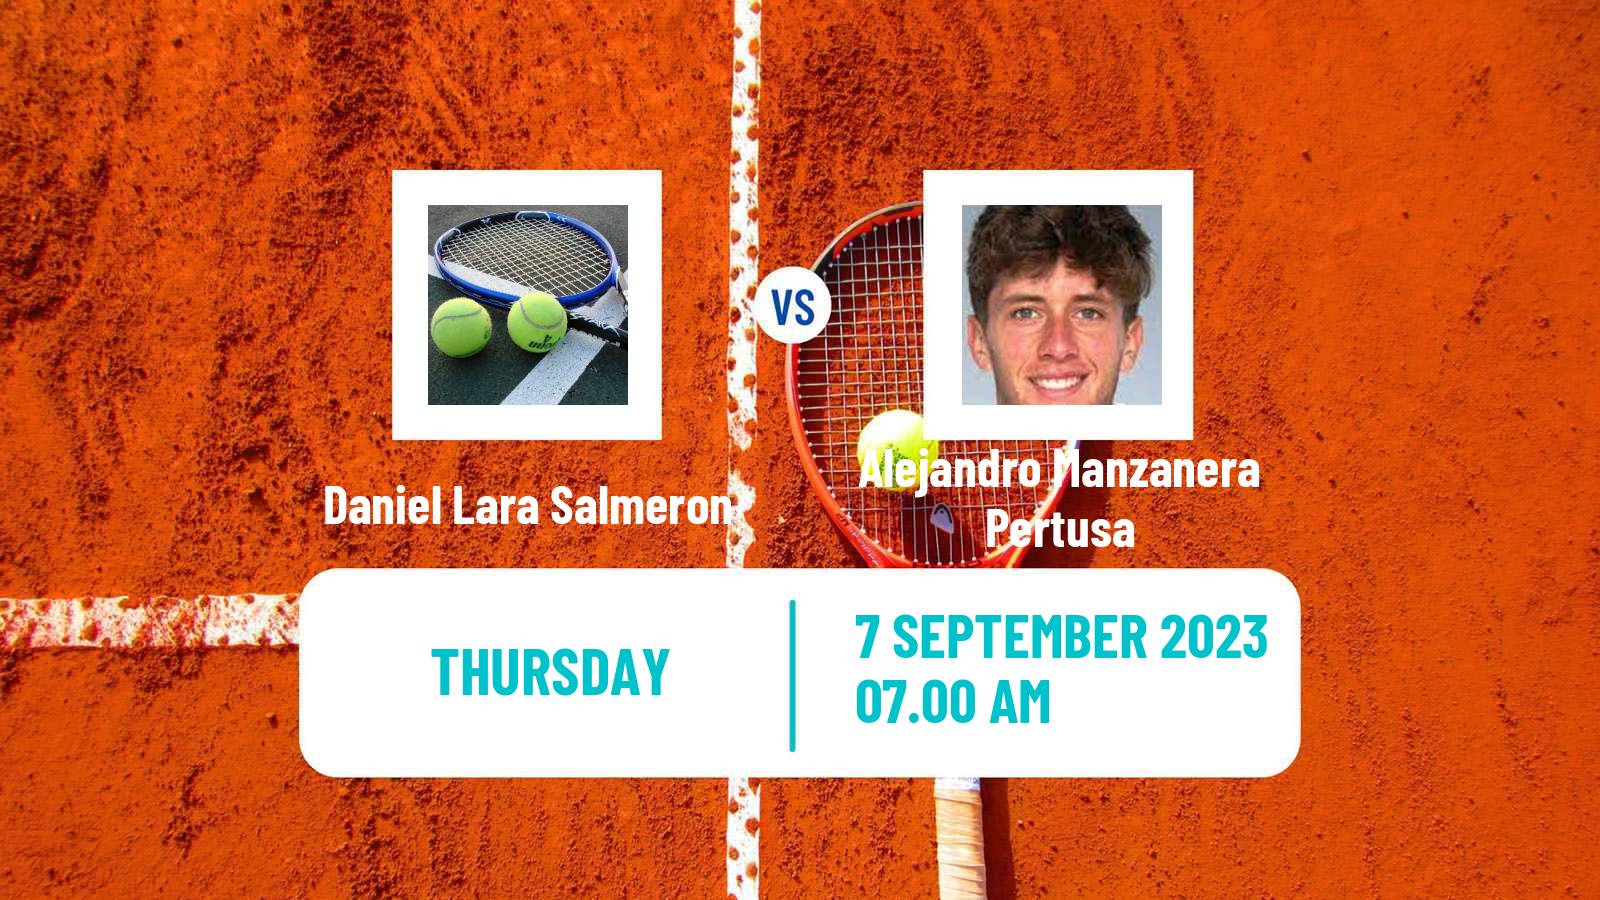 Tennis ITF M15 Madrid Men Daniel Lara Salmeron - Alejandro Manzanera Pertusa